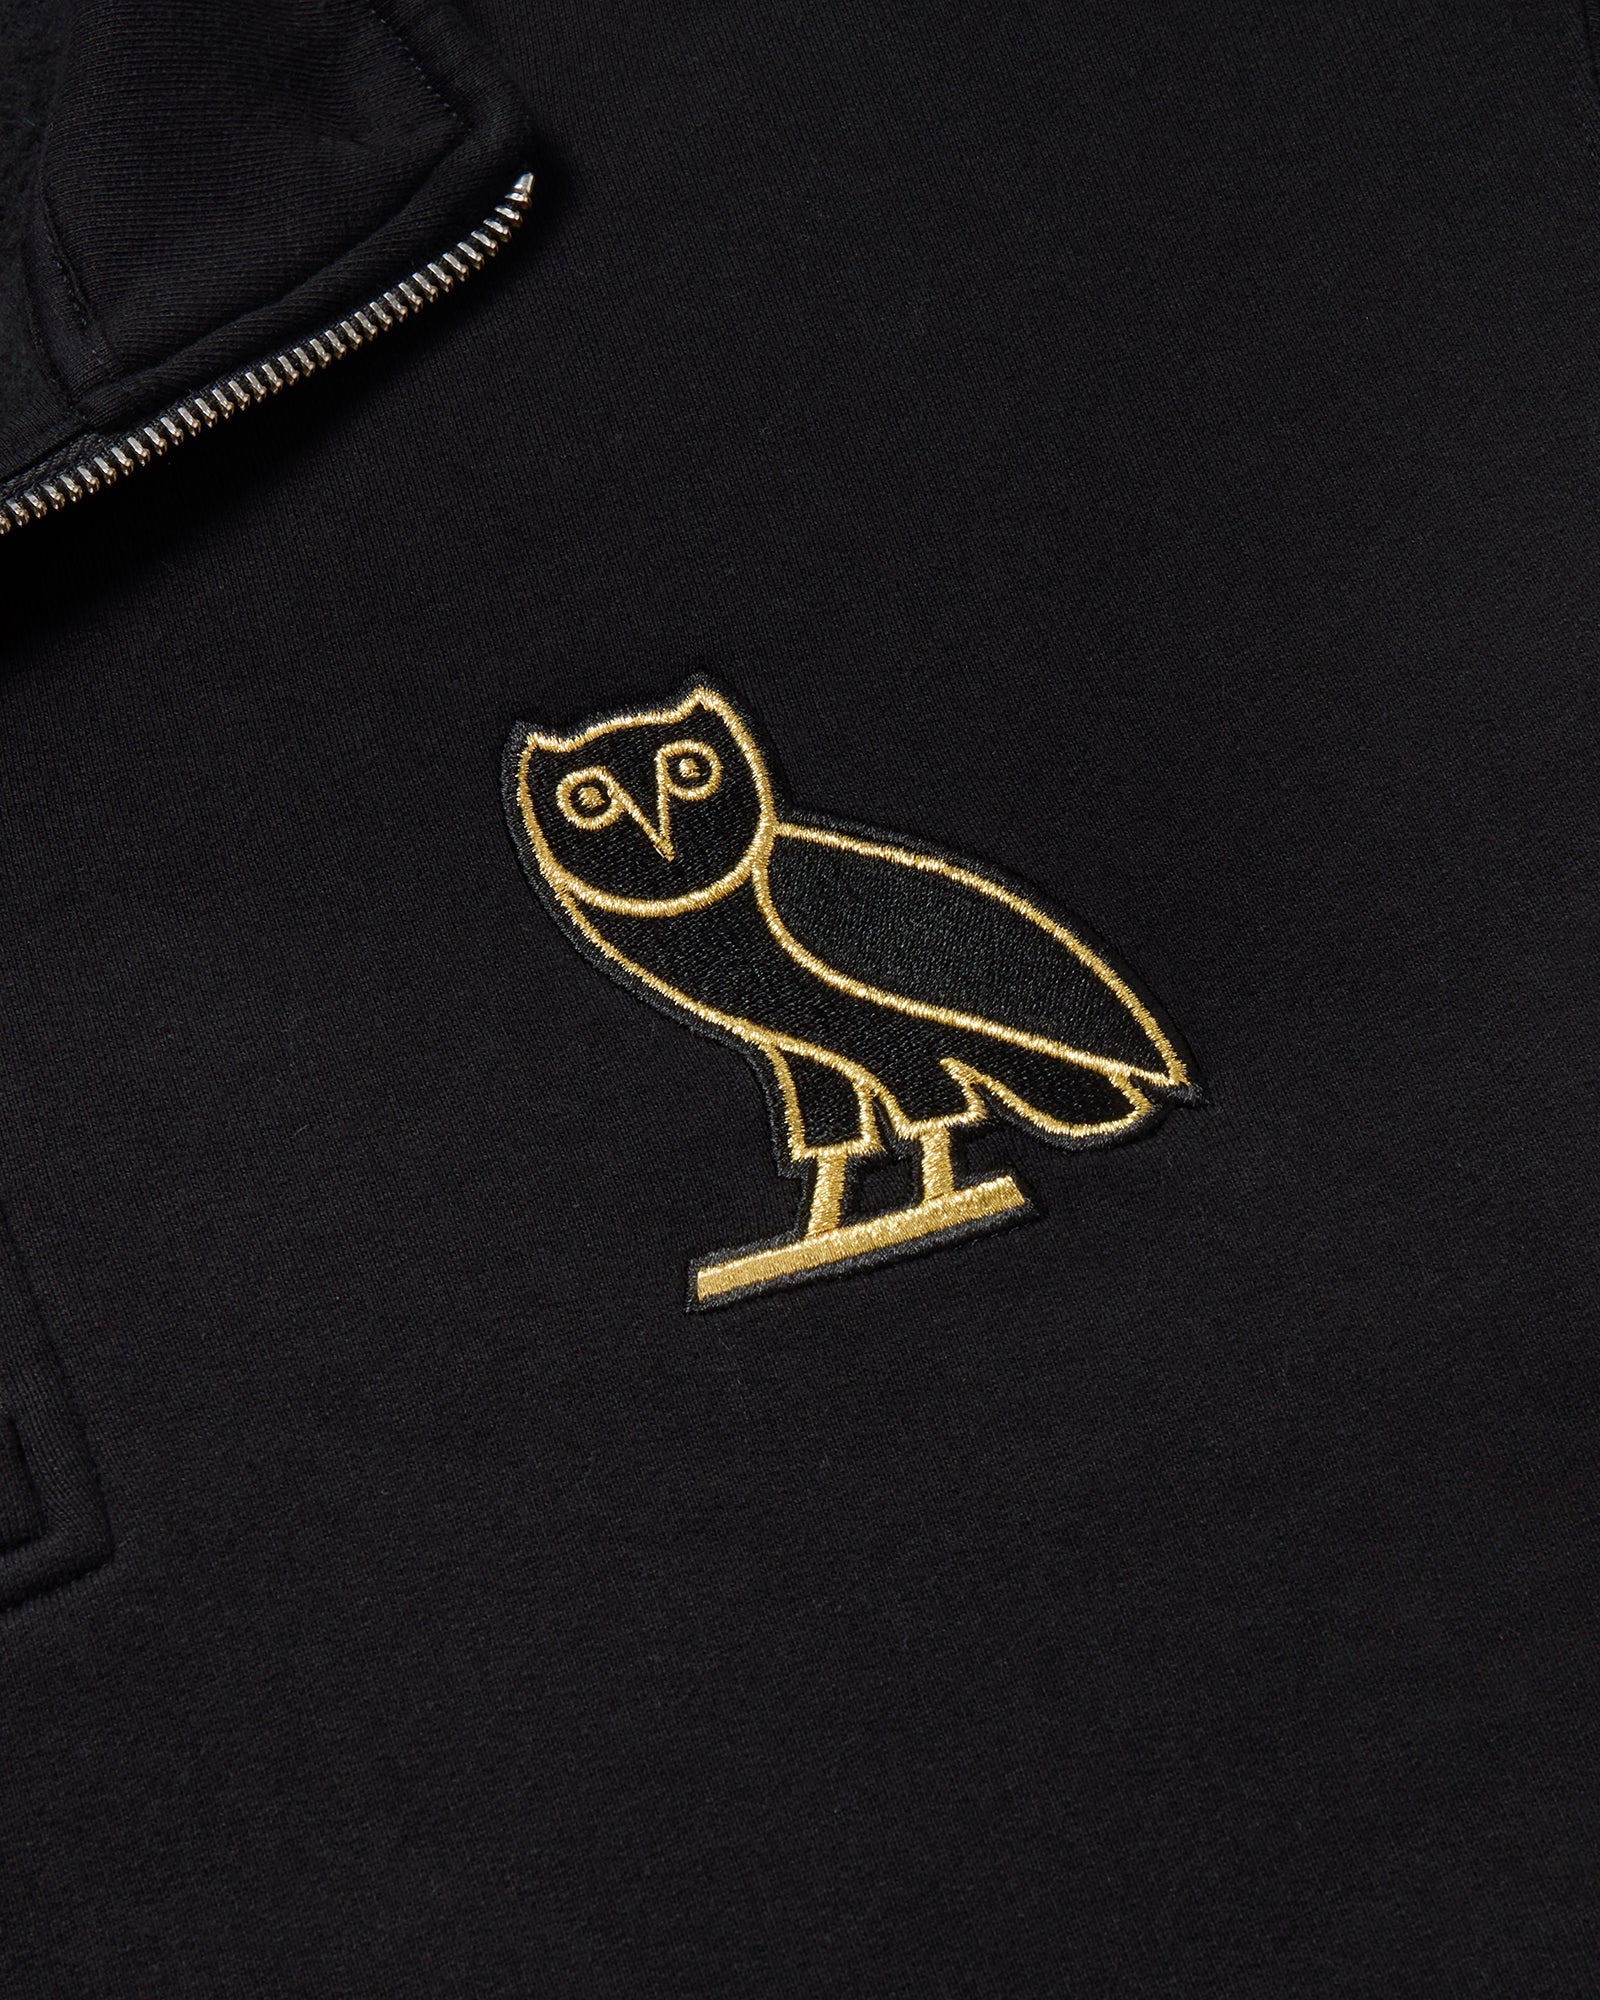 Is this ovo classic owl hoodie legit? : r/OctobersVeryOwn